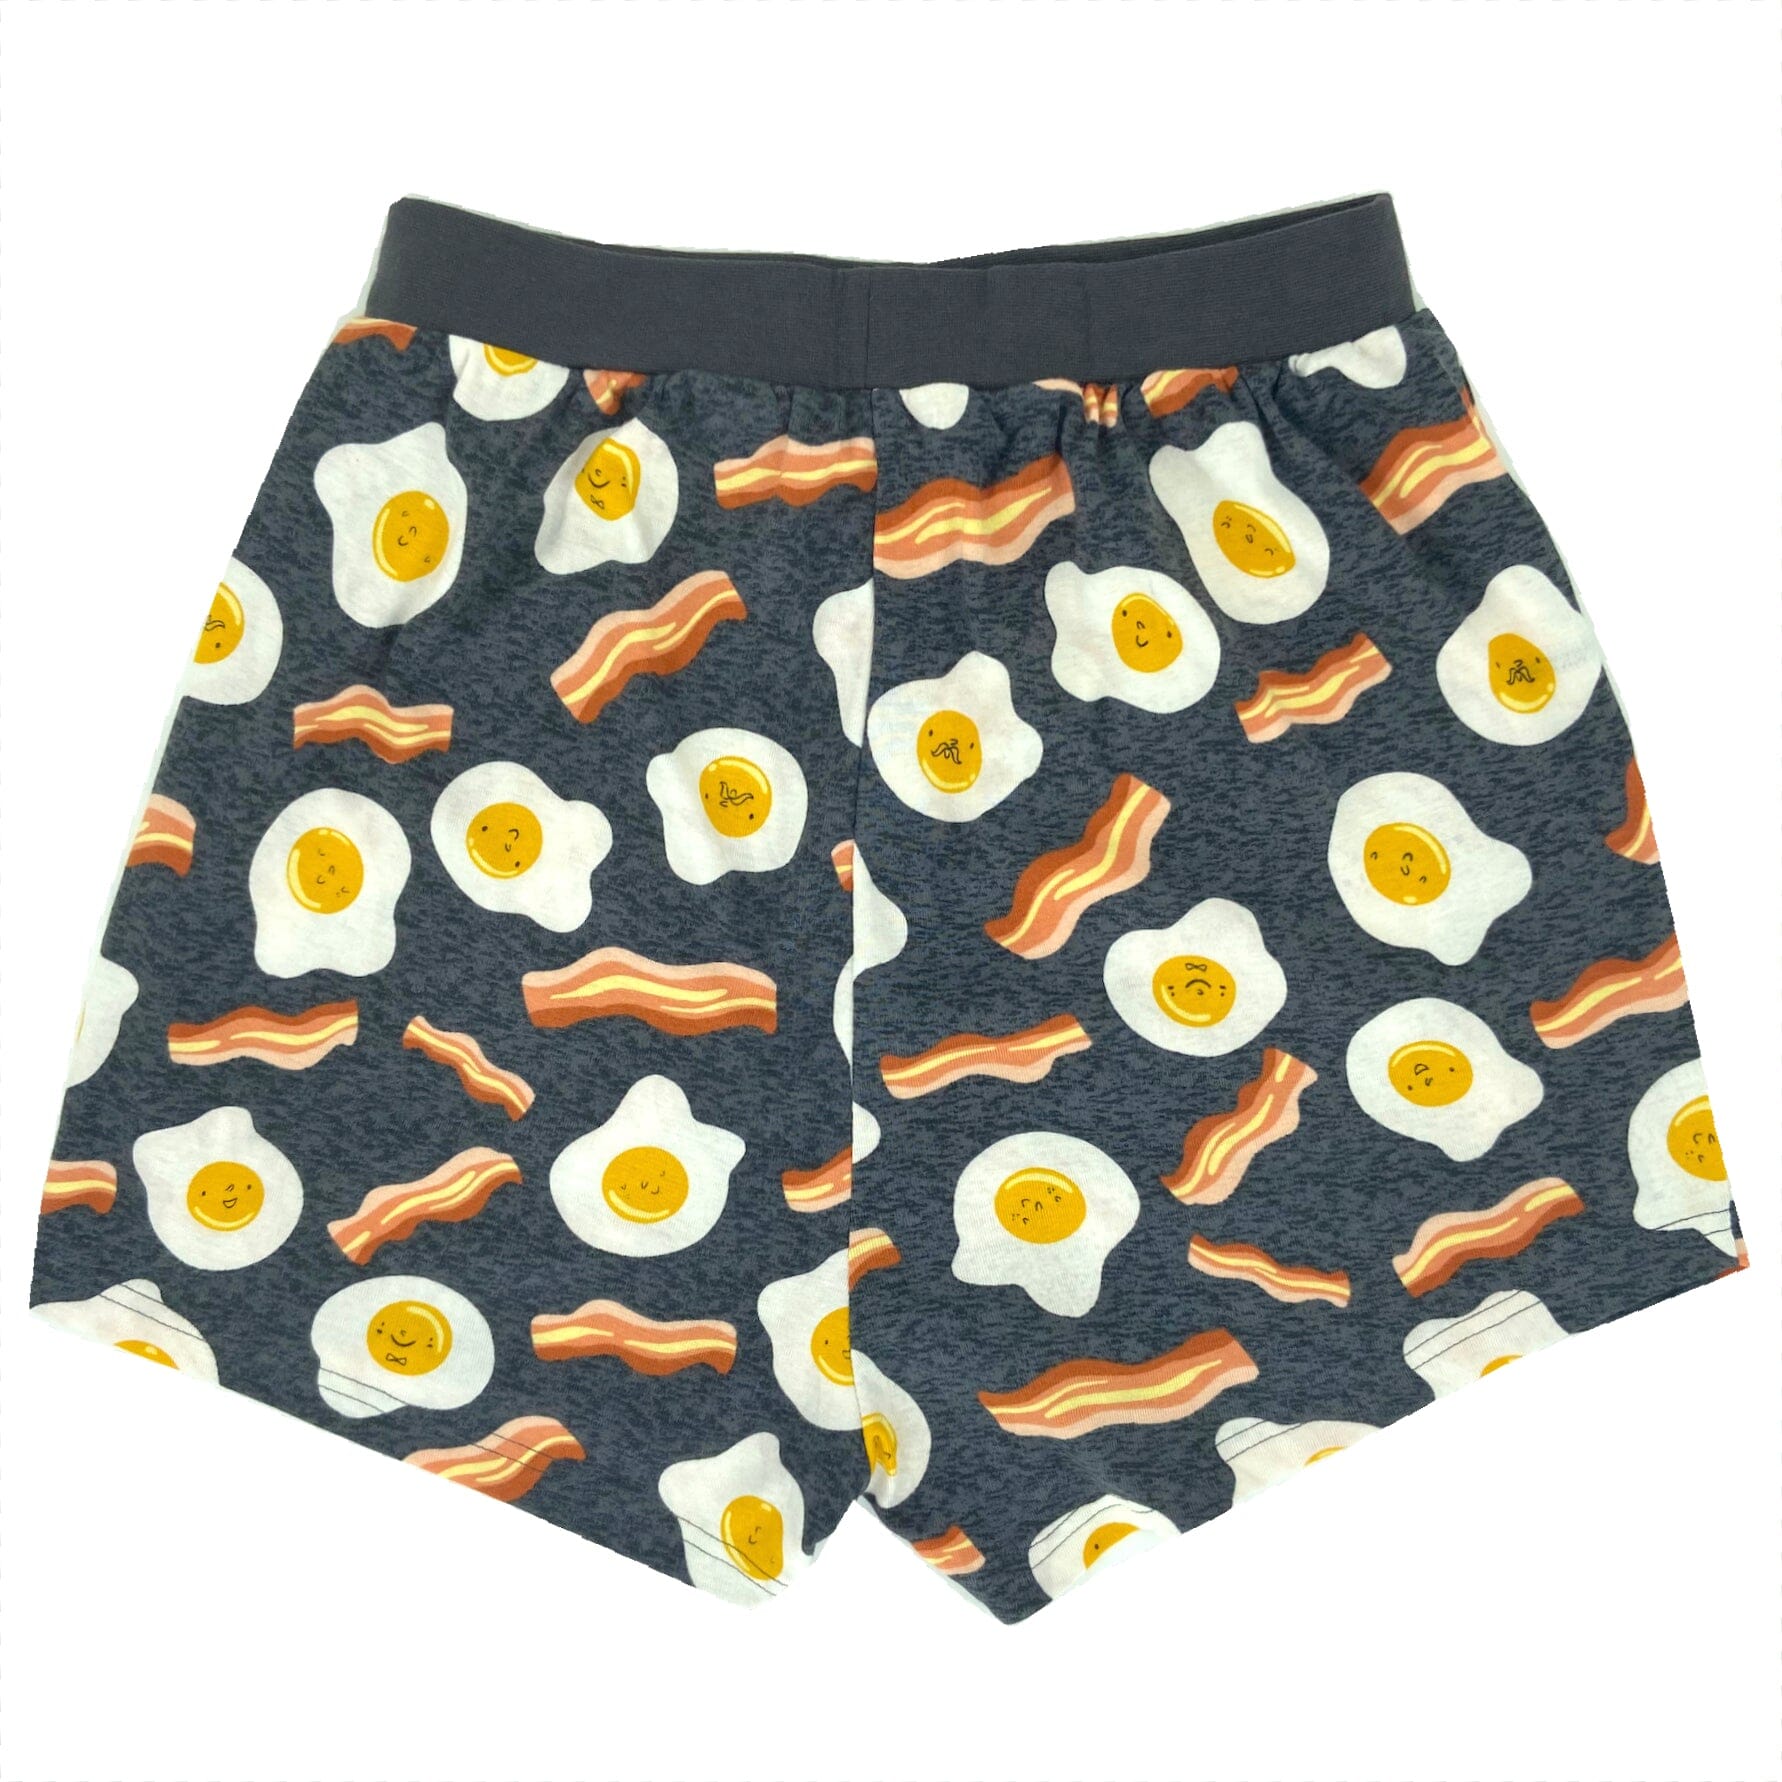 Bacon And Egg Sleep Pajama Shorts For Men. Buy Men's Breakfast Boxers